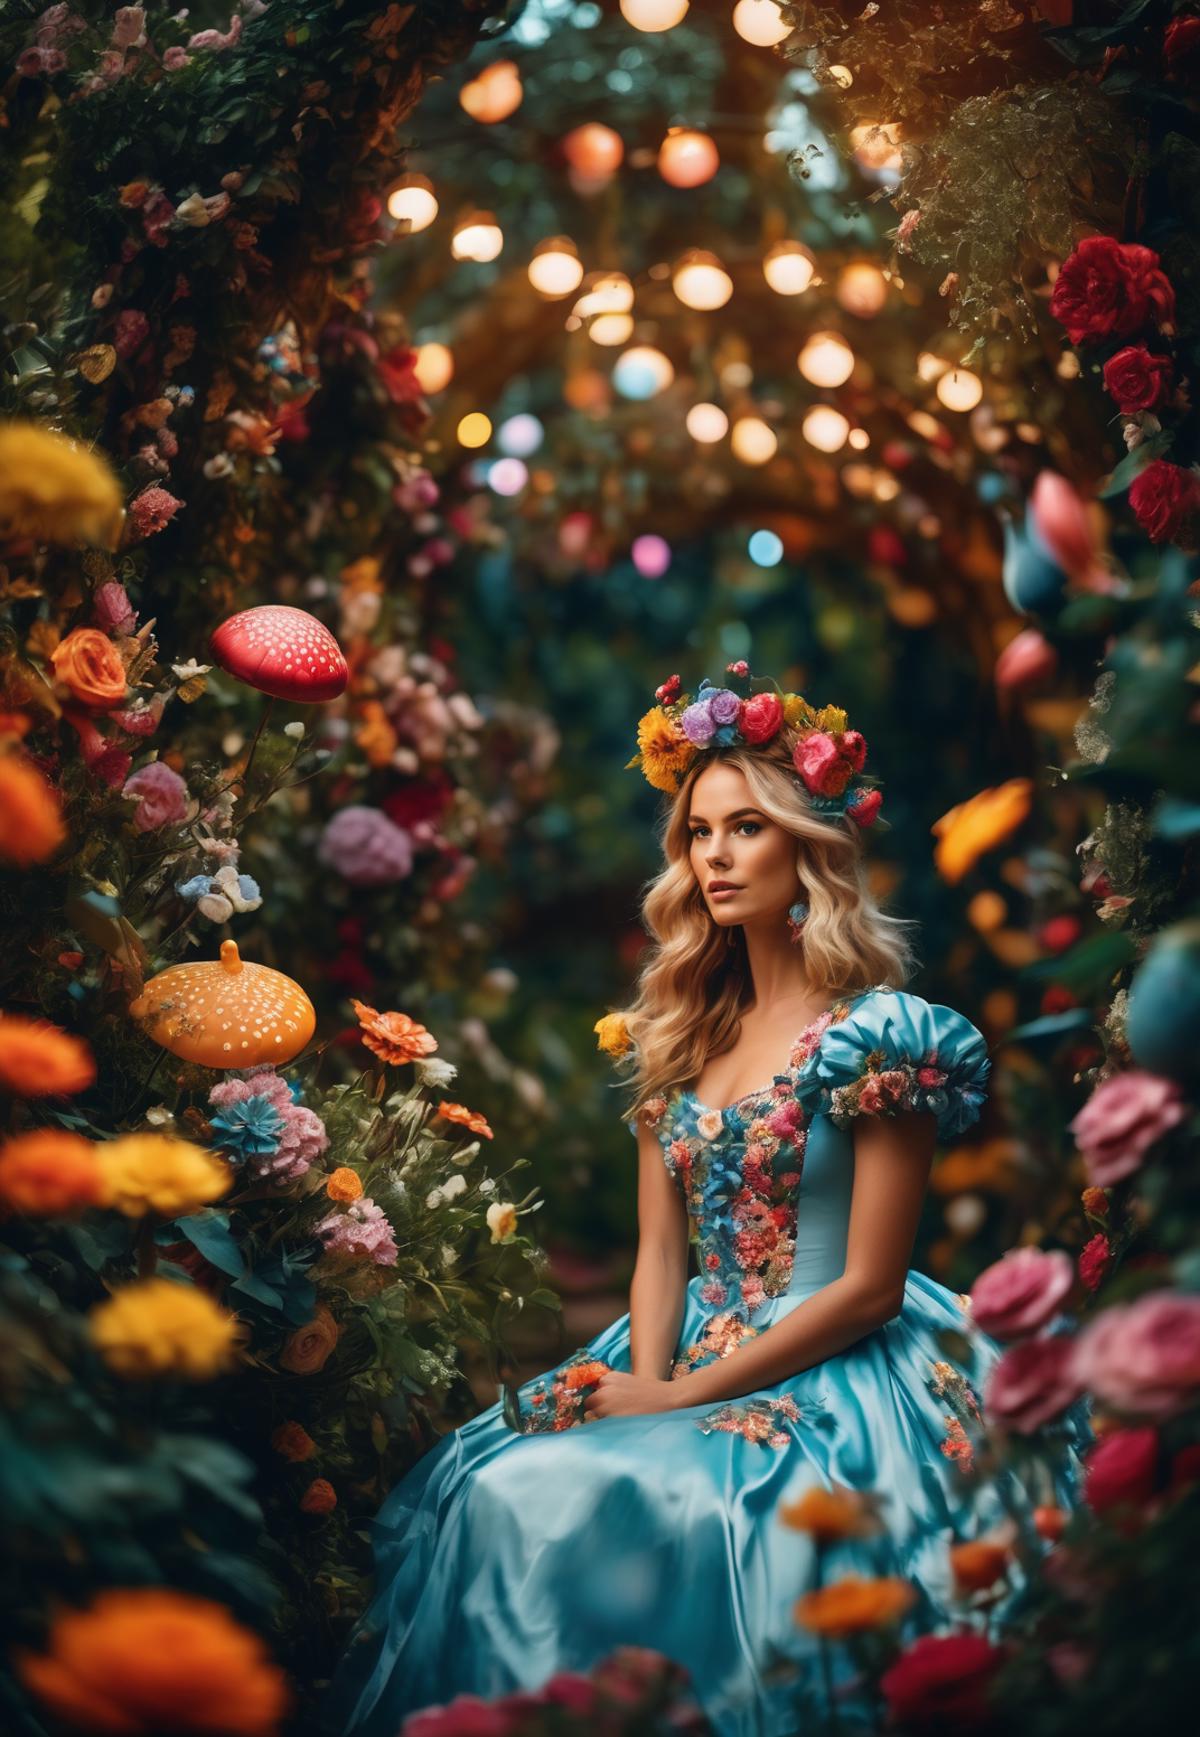 A woman in a blue dress wearing a flower crown sits in a garden.